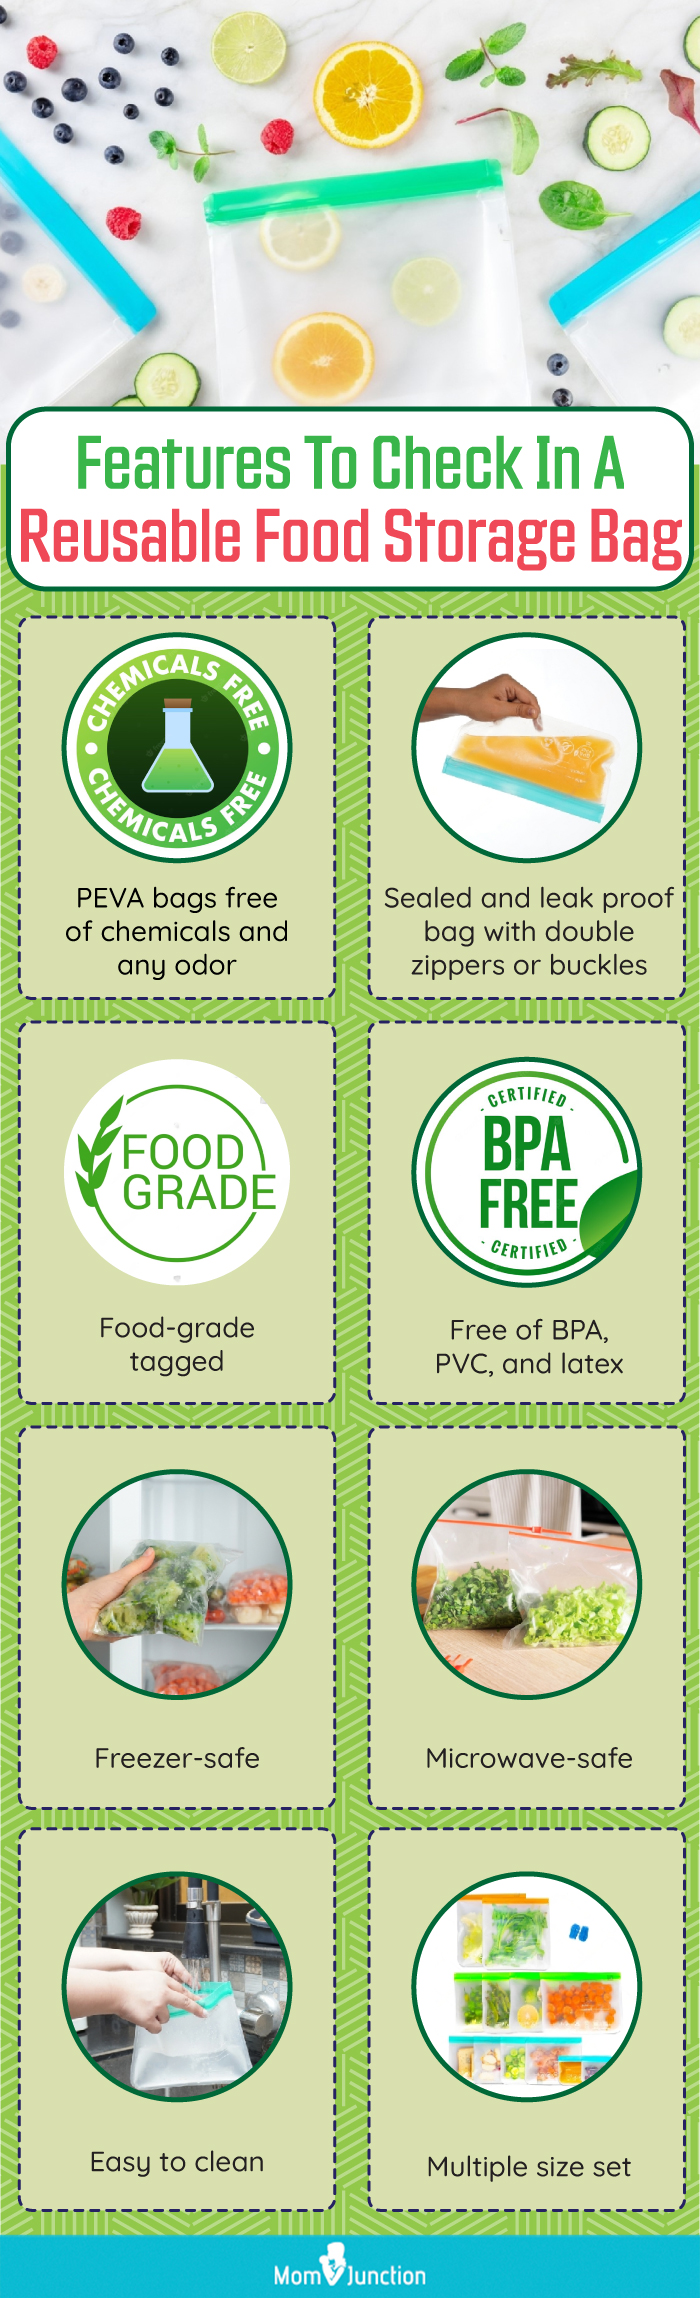 Reusable Food Storage Bags - 12 Count BPA Free Reusable Freezer